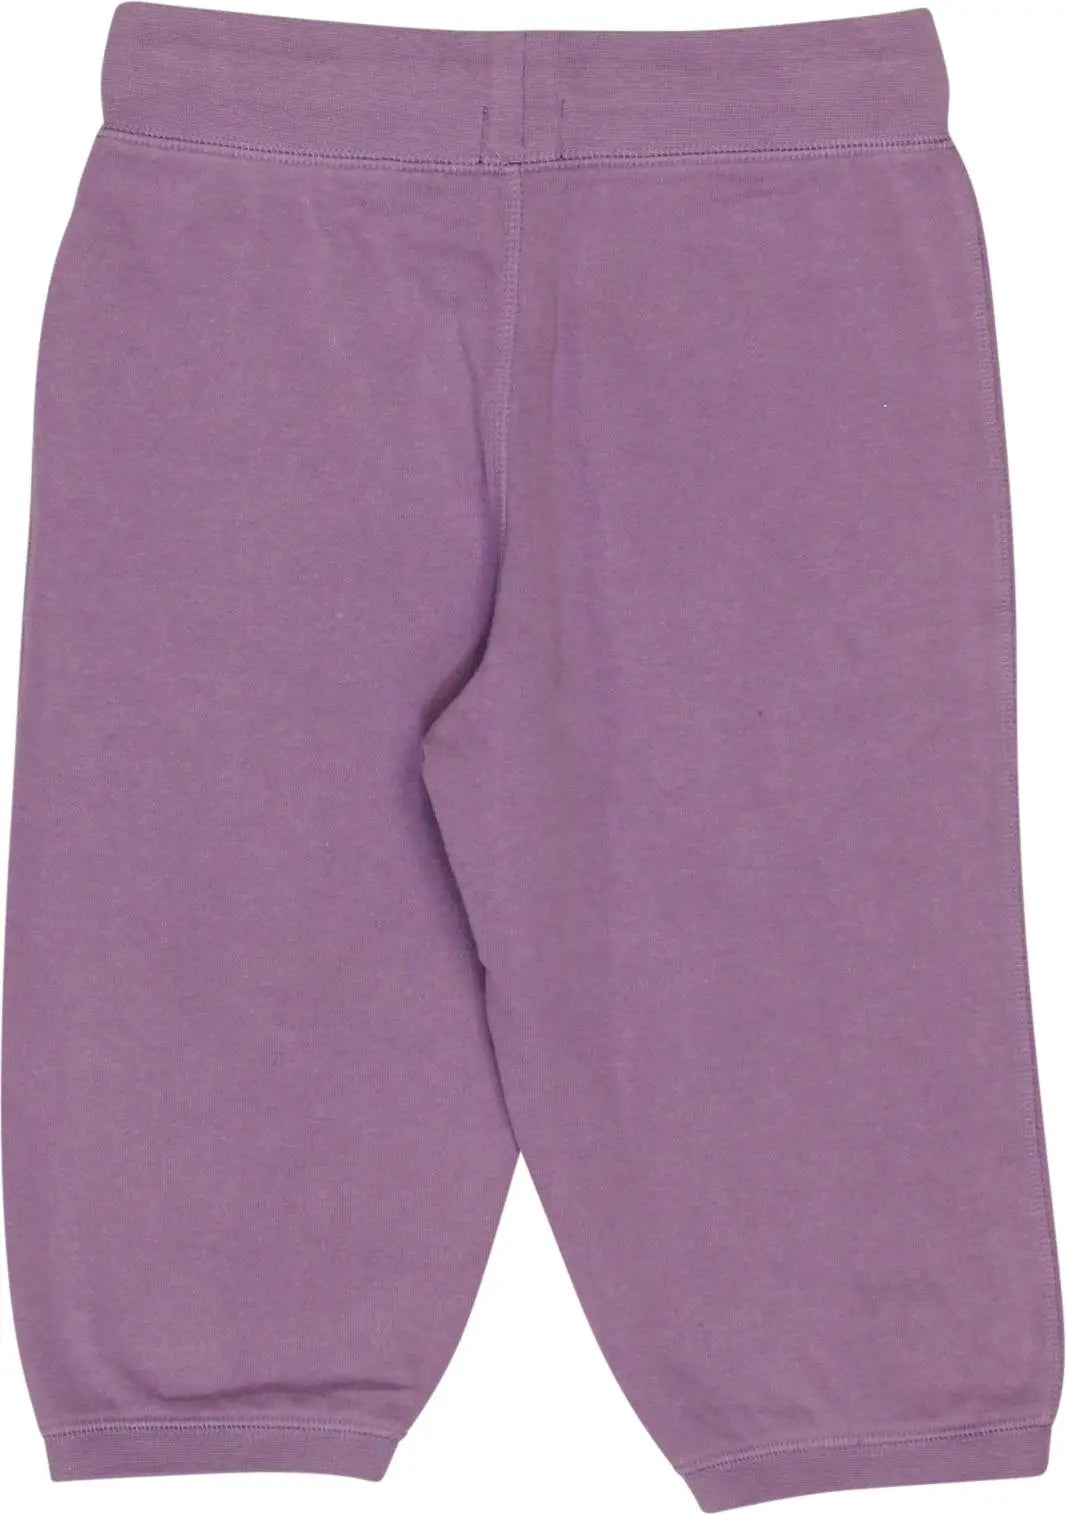 H&M - Short Sweatpants- ThriftTale.com - Vintage and second handclothing